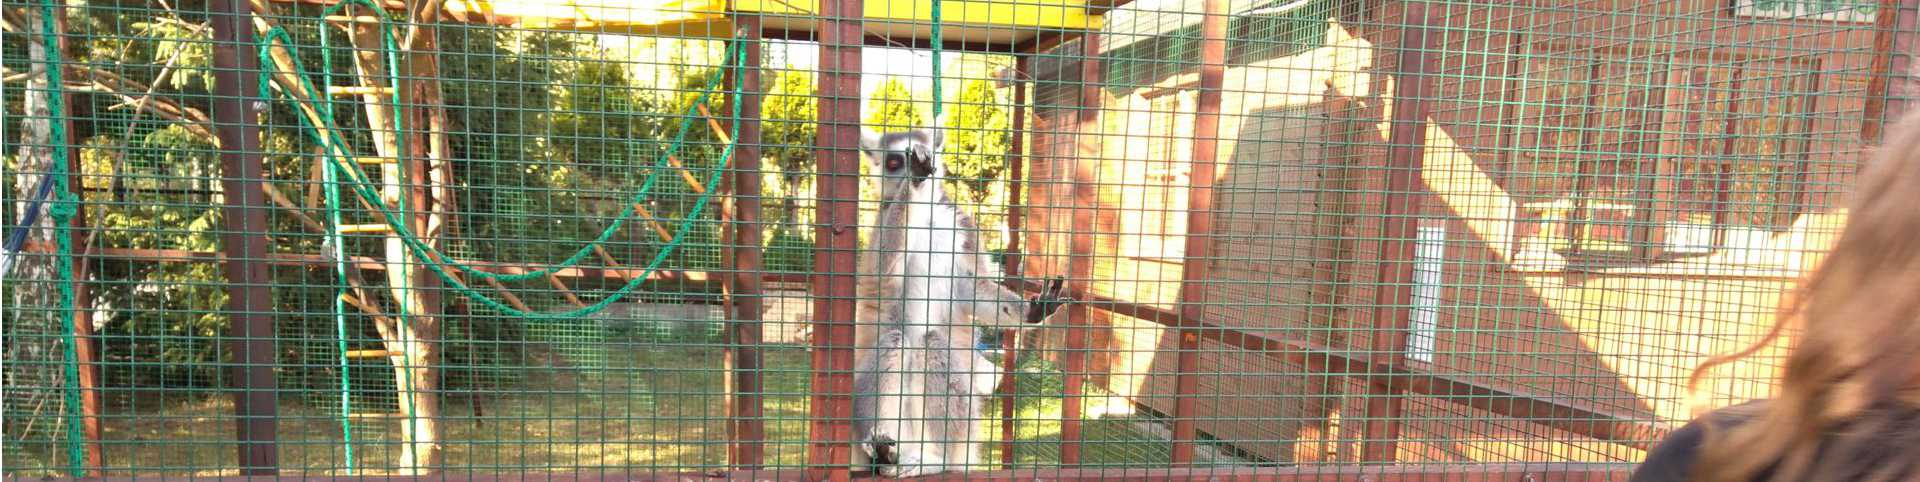 Lemur w Lemur parku